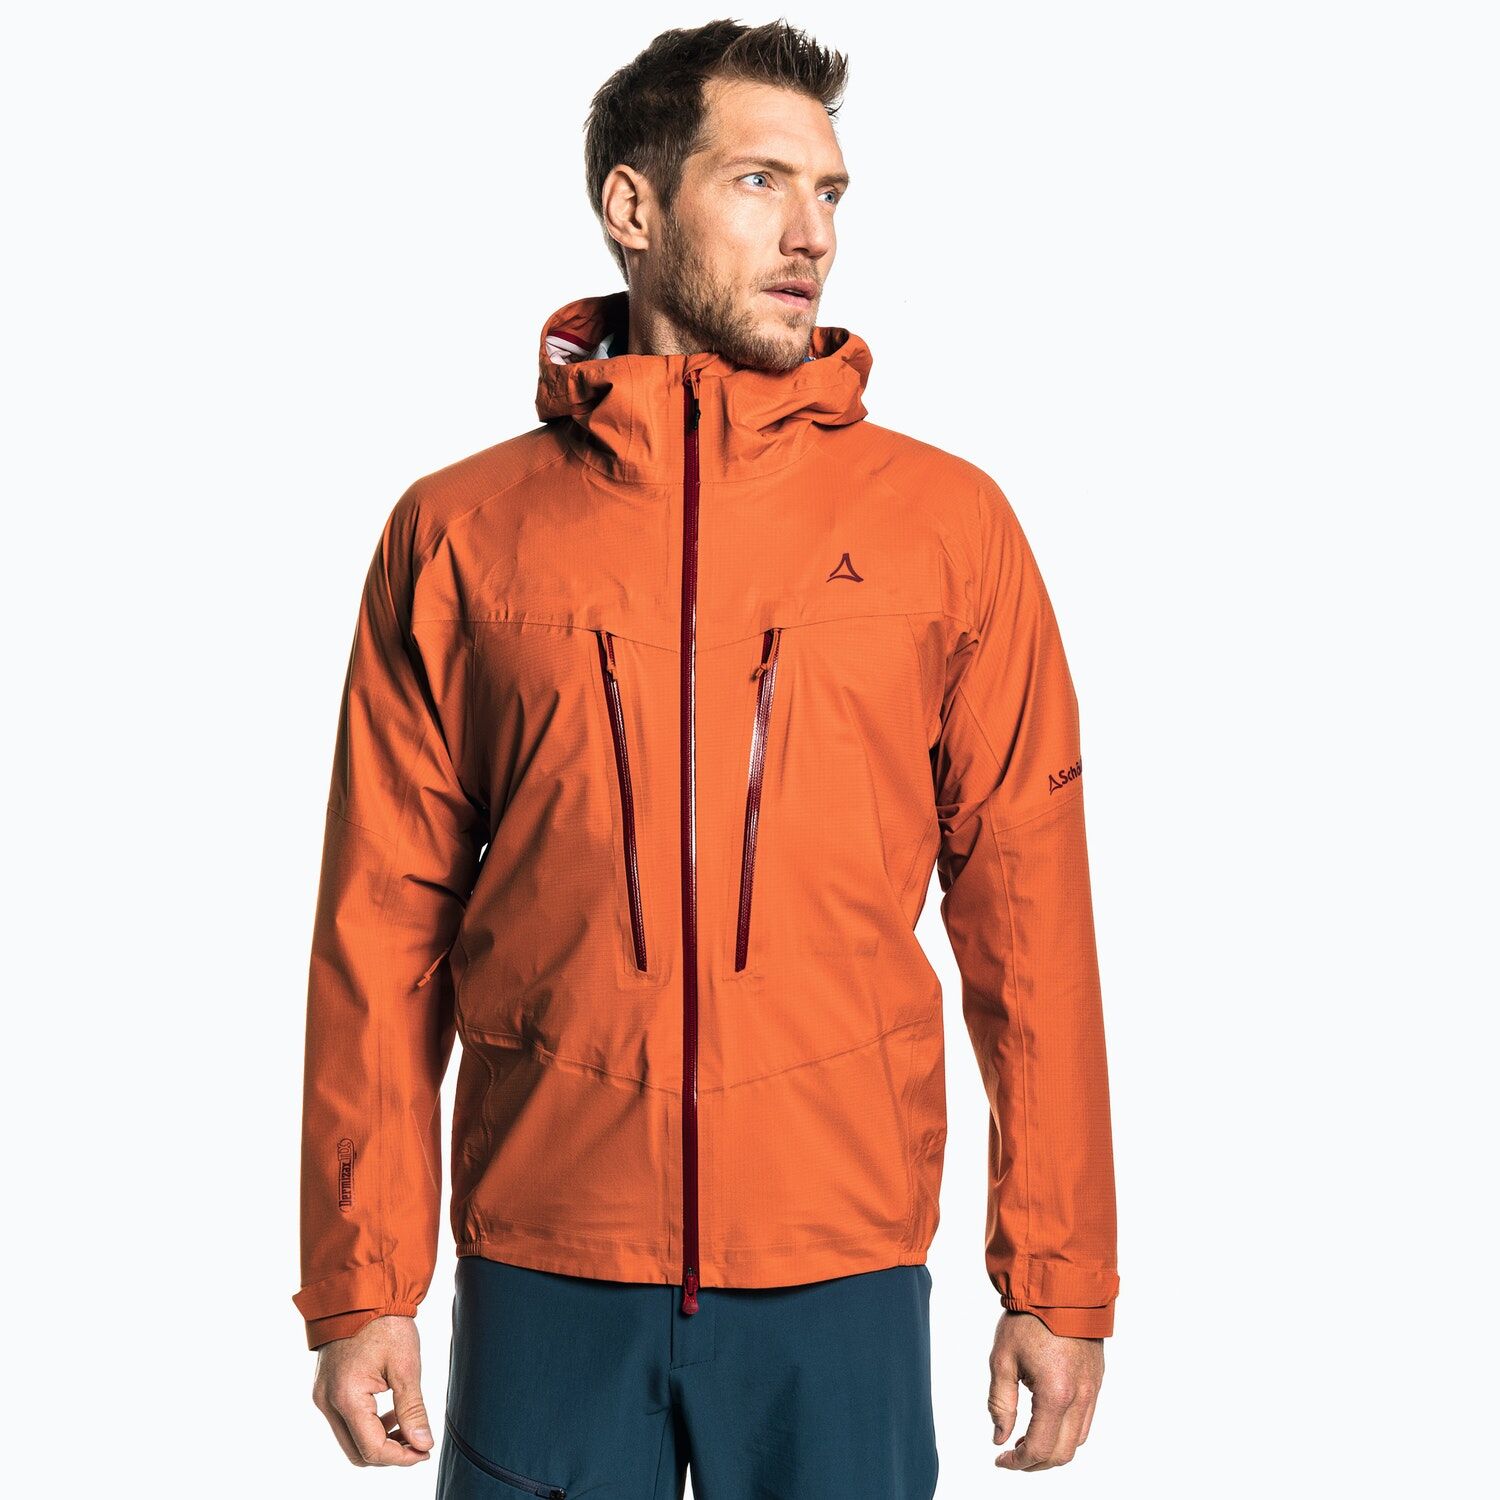 Schöffel 3L Jacket Rothorn - Waterproof jacket - Men's